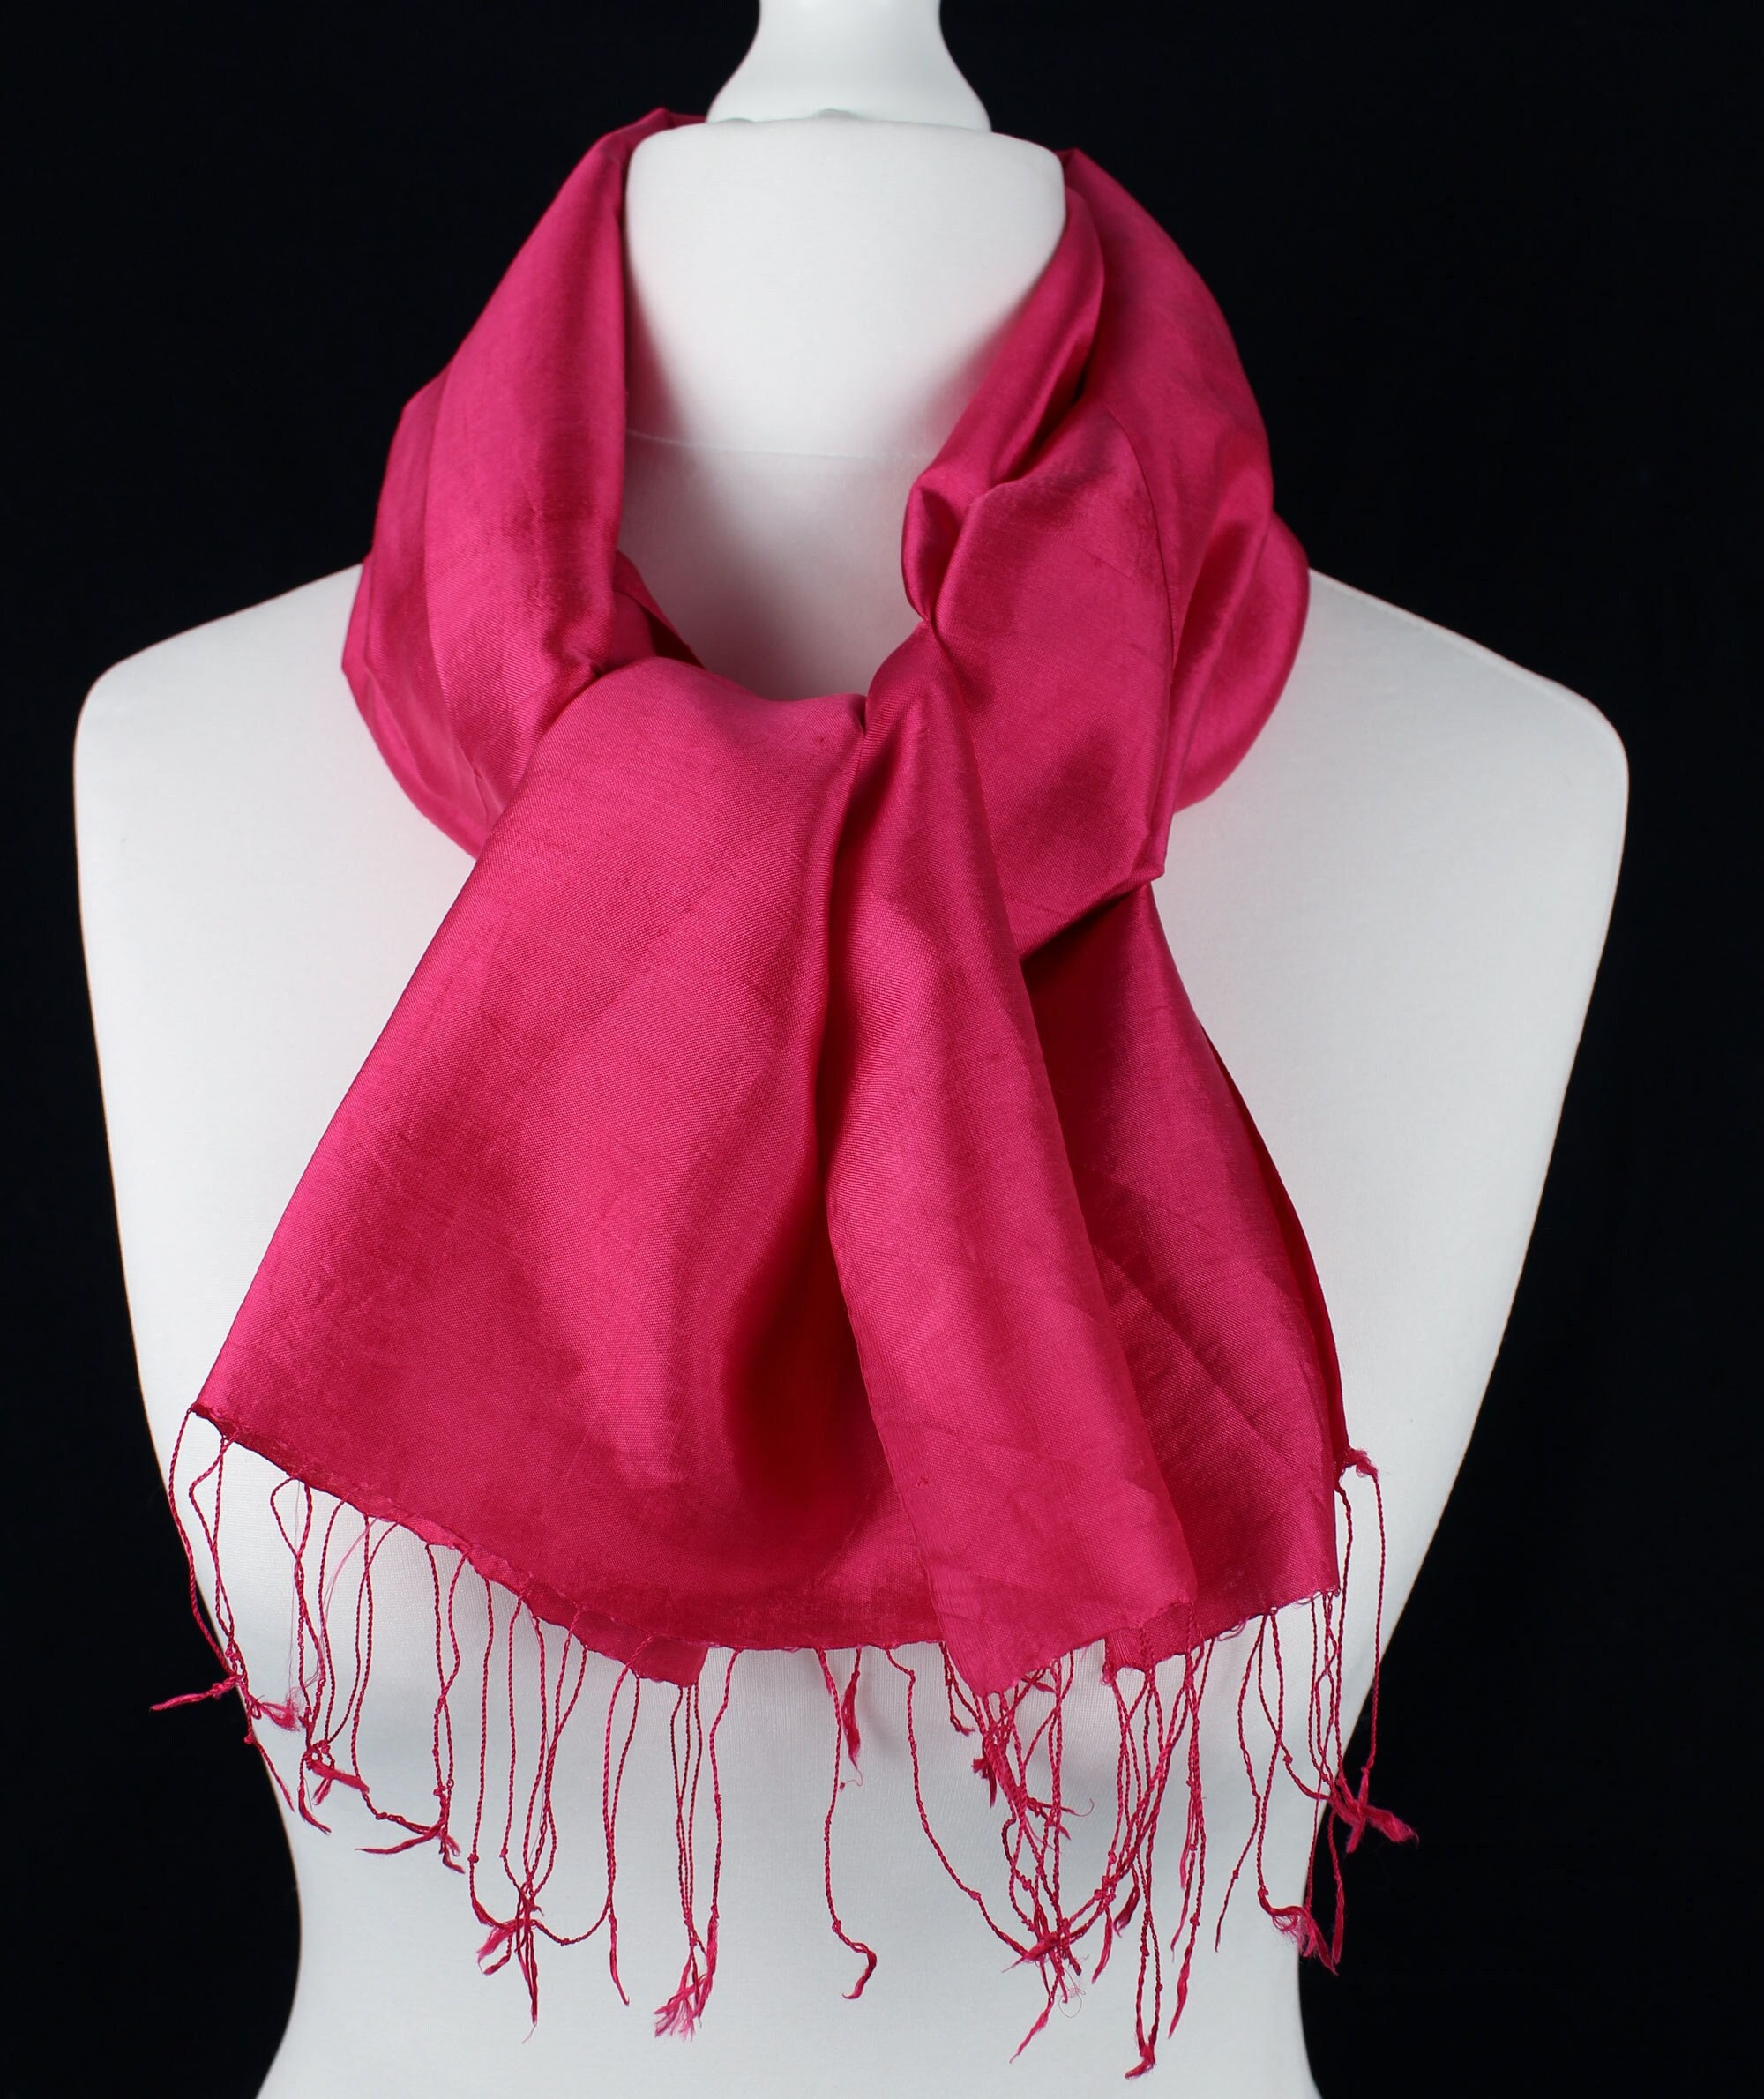 discount 67% Valentino Nude silk scarf WOMEN FASHION Accessories Shawl Pink Pink Single 